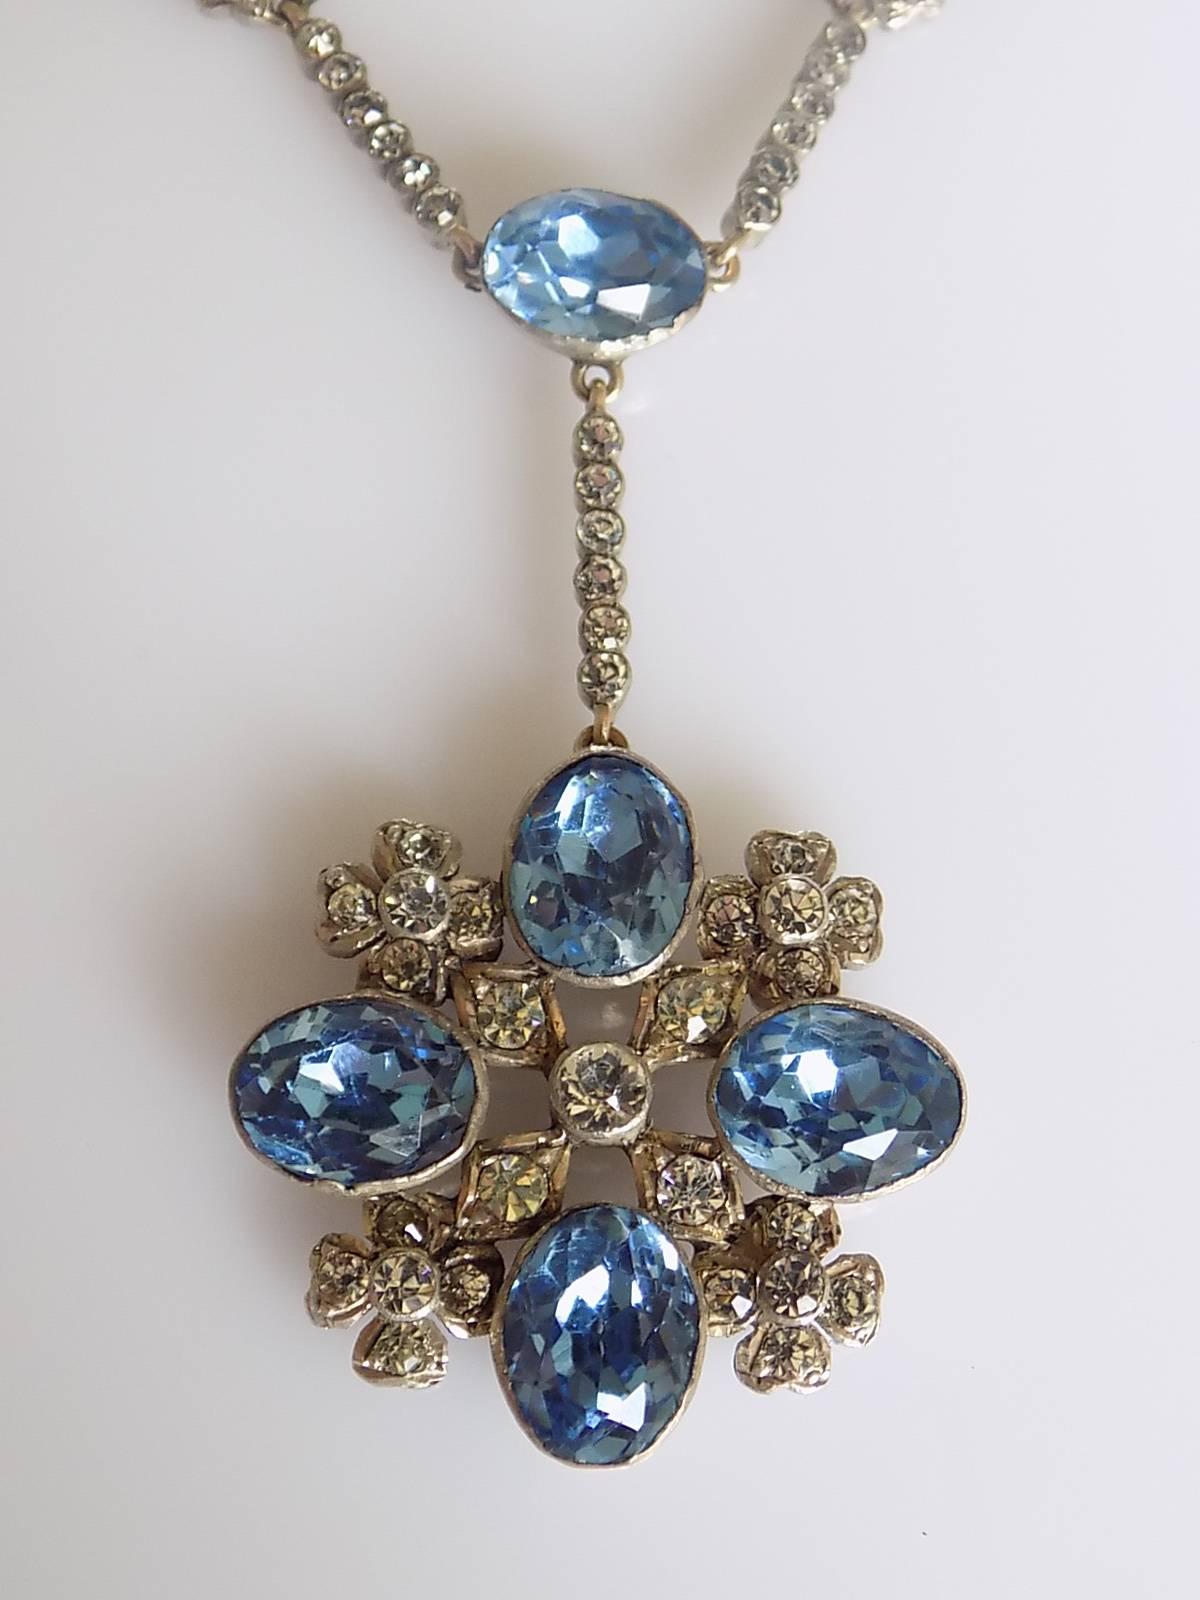 Women's Antique Edwardian Gold Silver Paste Earrings Necklace Set